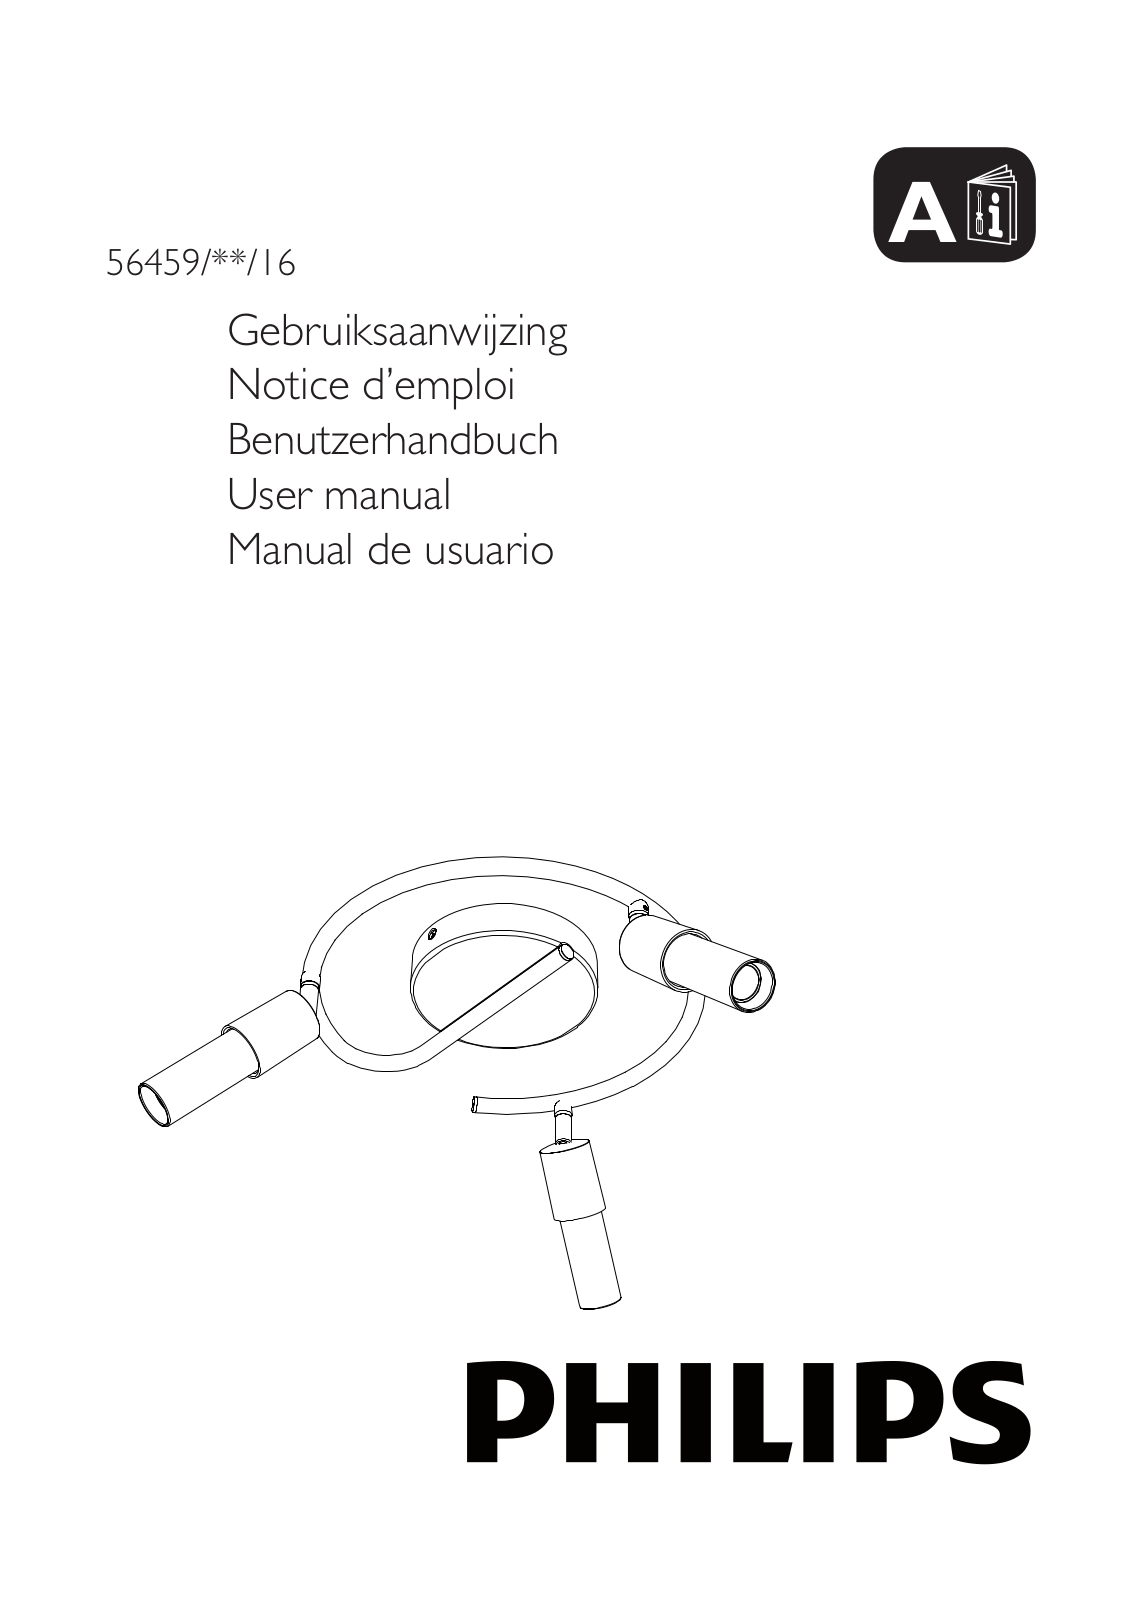 Philips 56459-17-16 User Manual